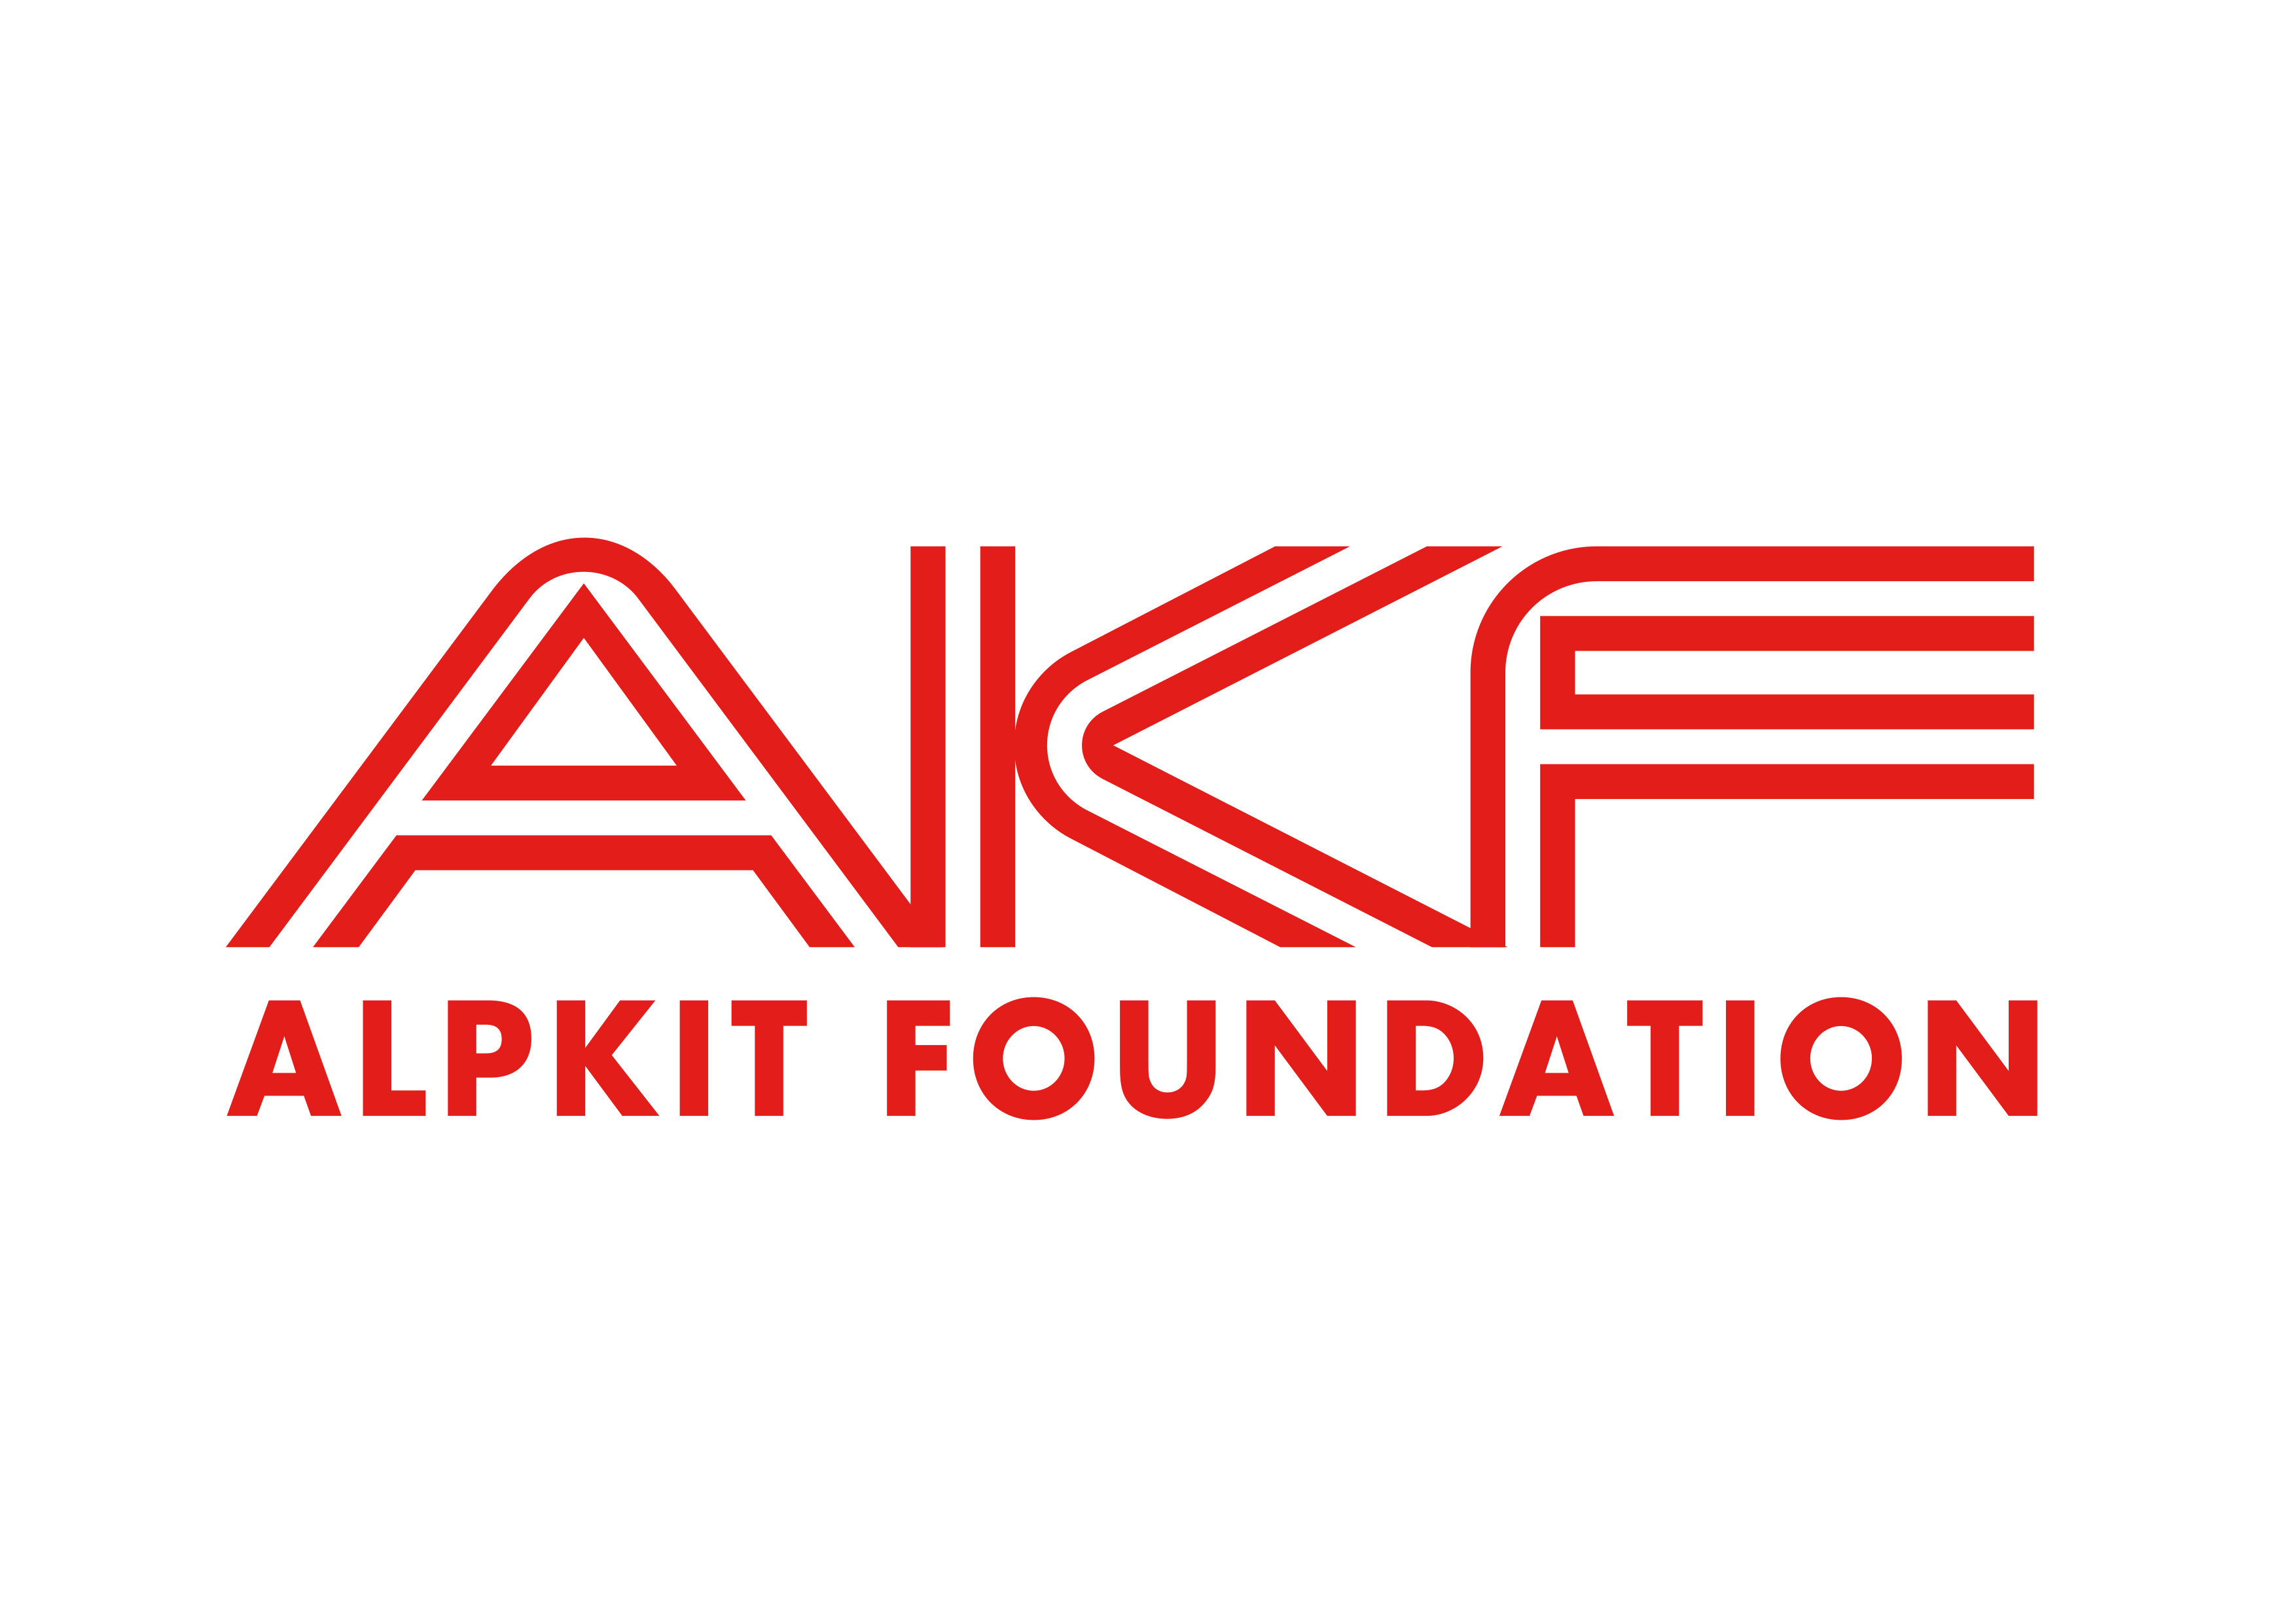 AKF-alpkit-foundation